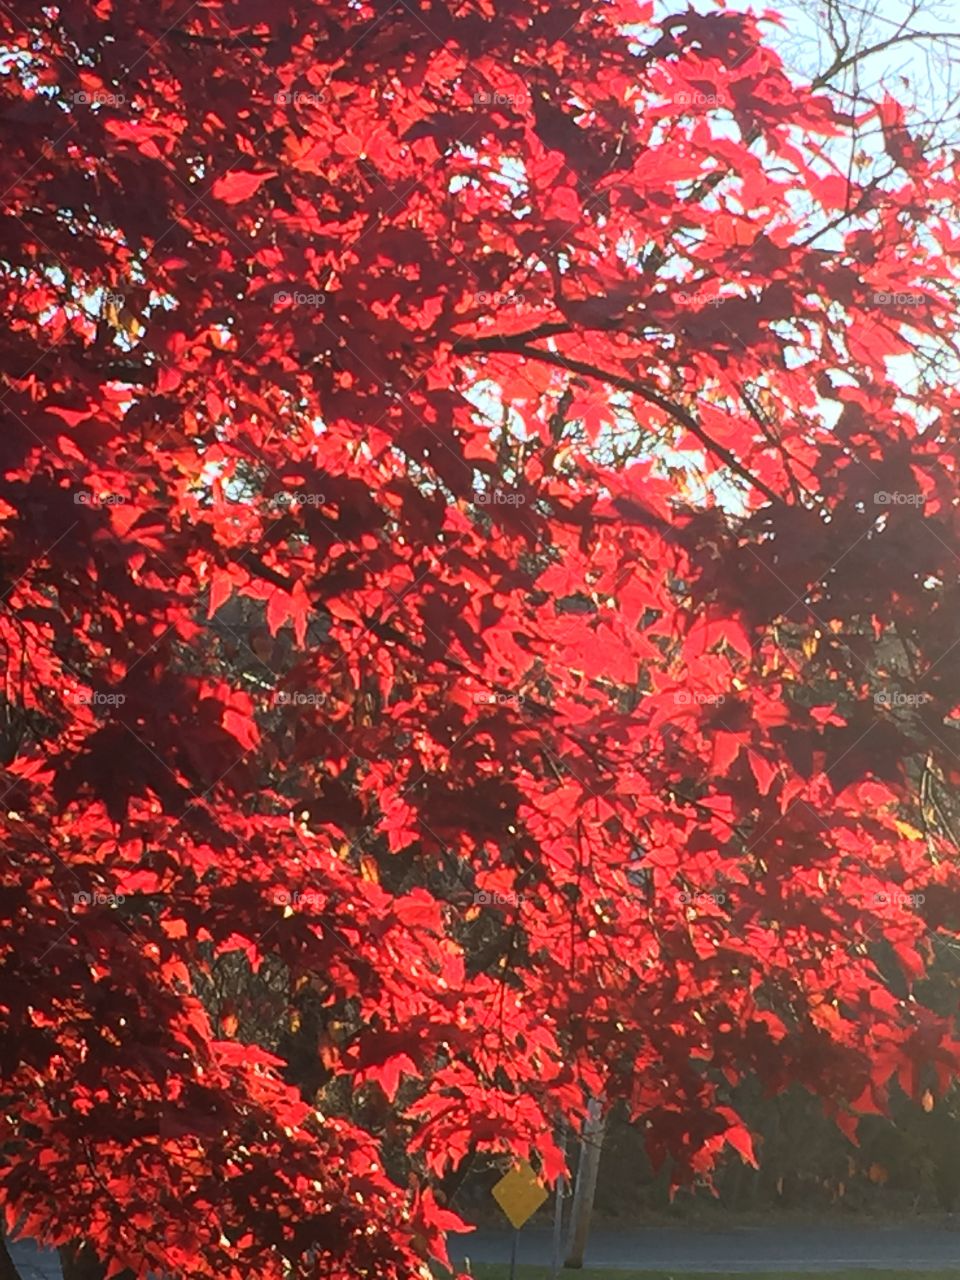 Japanese maple tree with dappled sunshine in fall autumn sun;  fall foliage peak